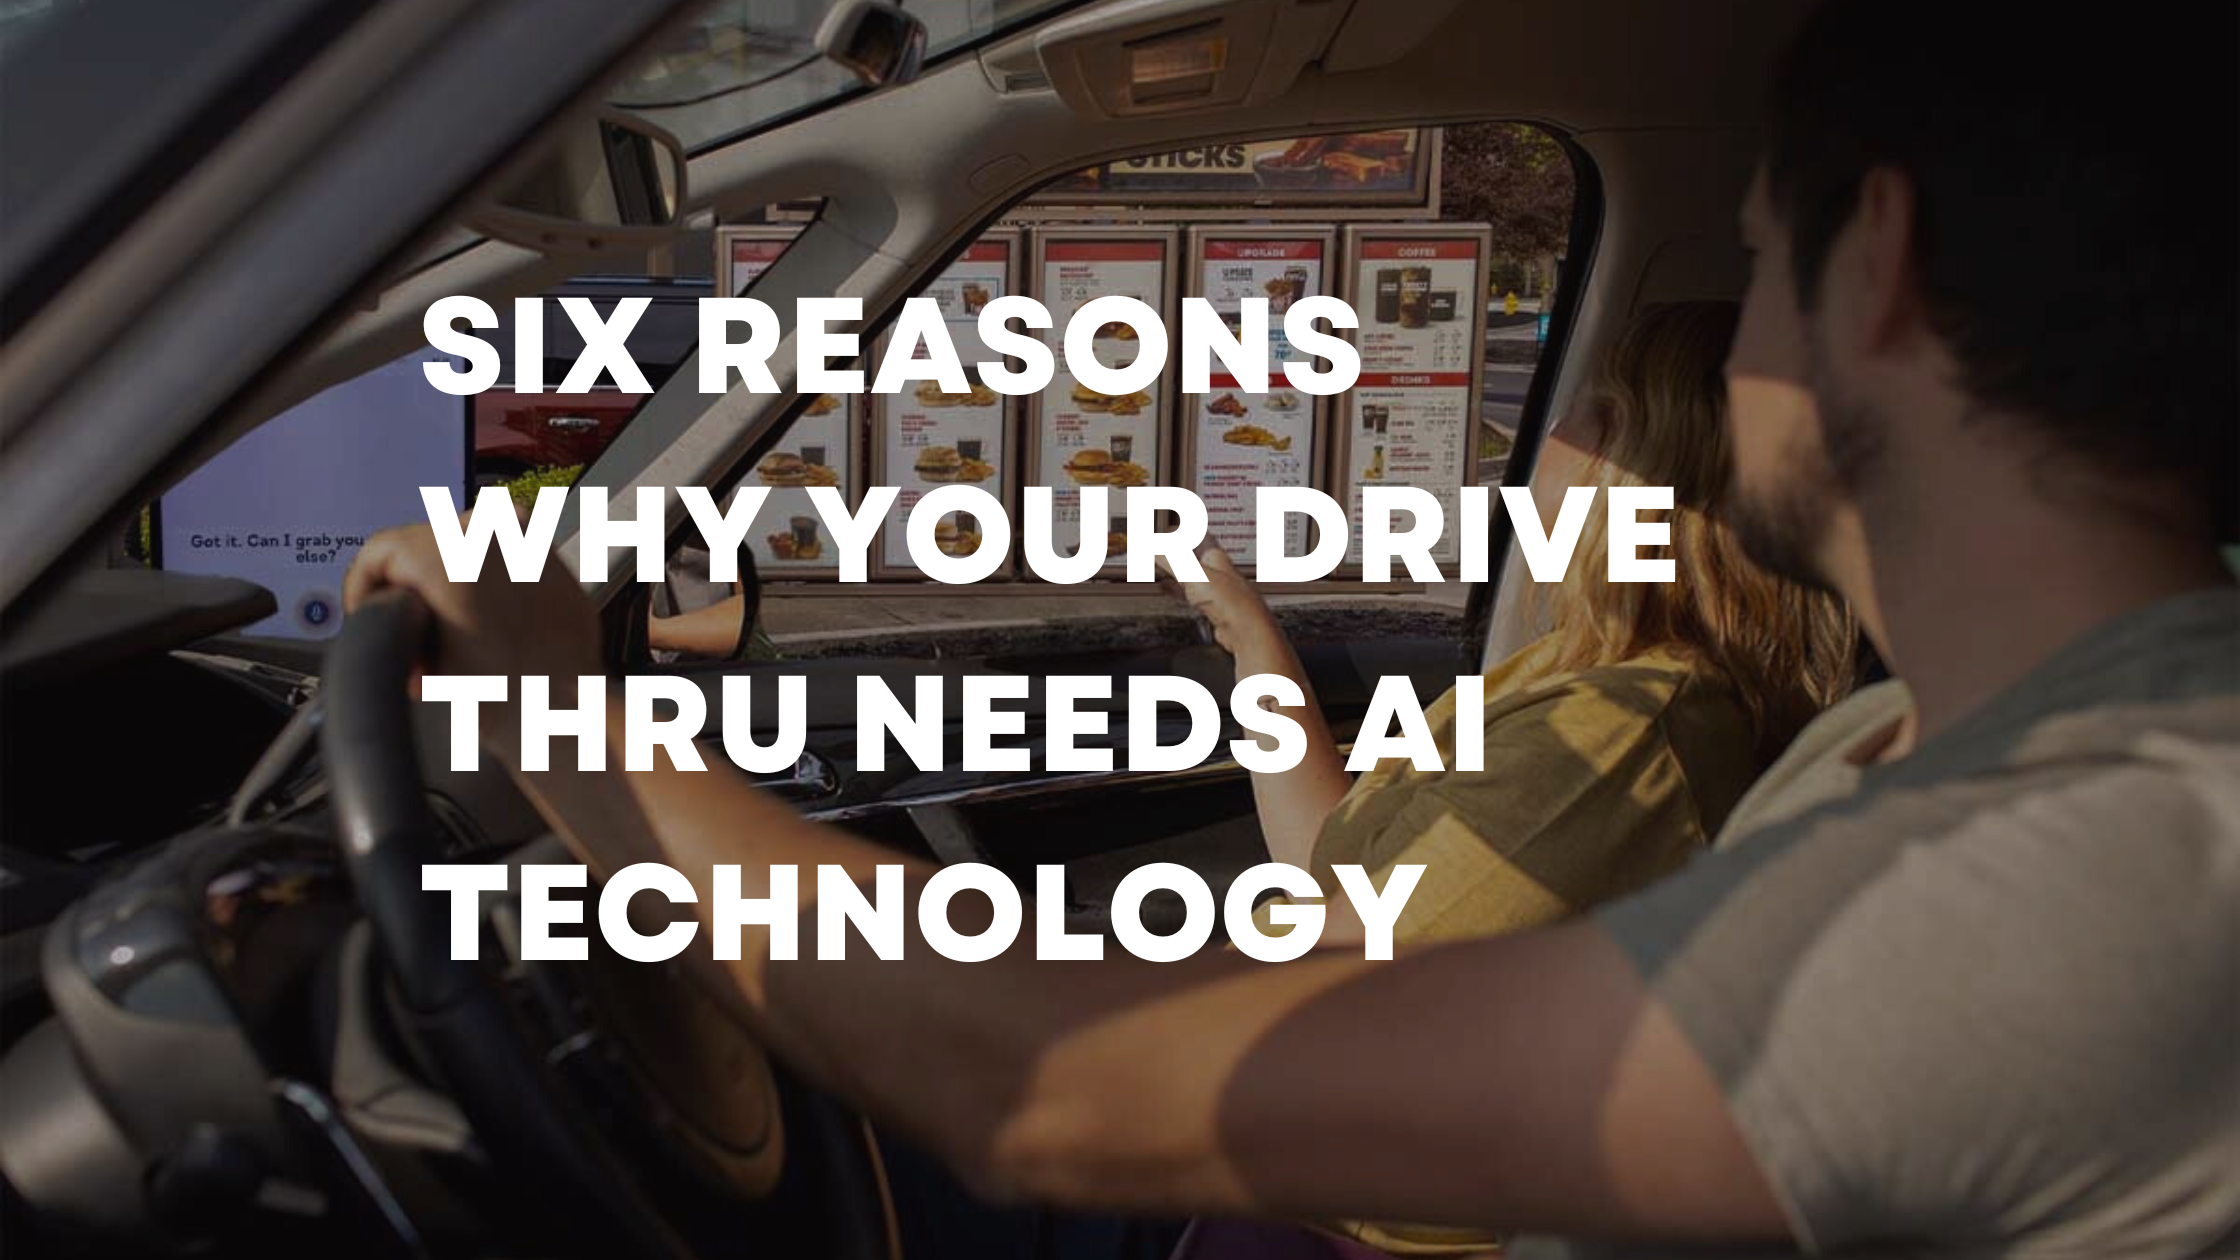 Six reasons why your drive thru needs AI technology